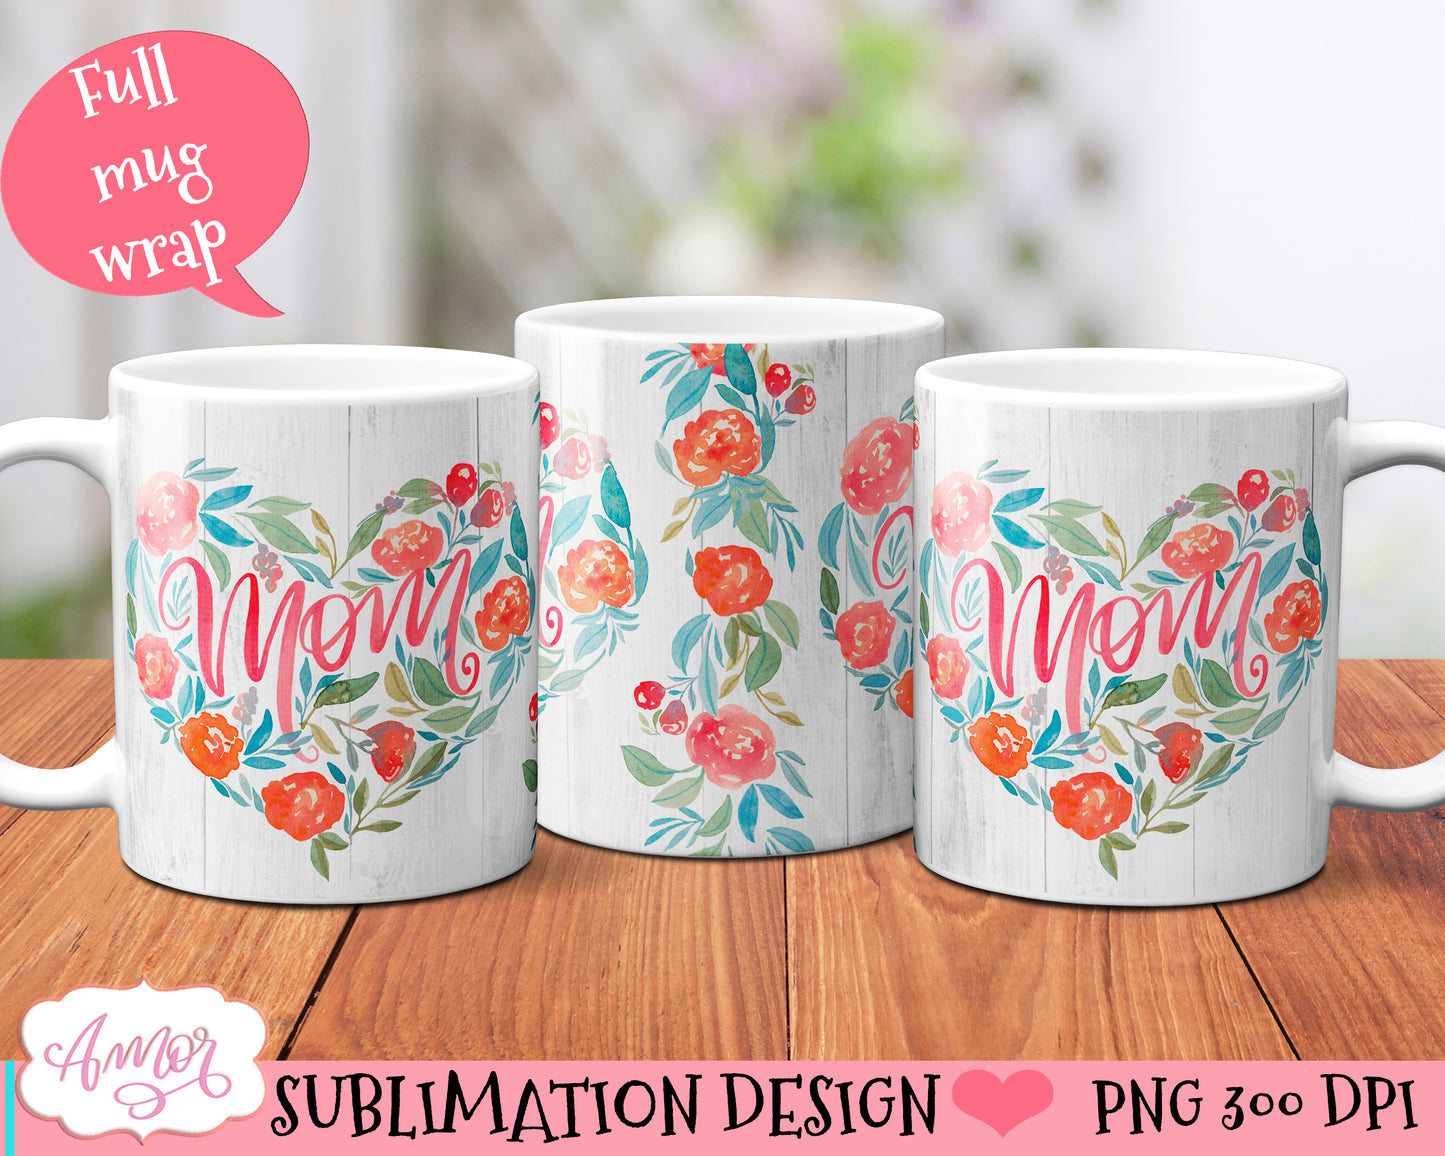 Mom mug wrap PNG | Mother's day sublimation design for mugs